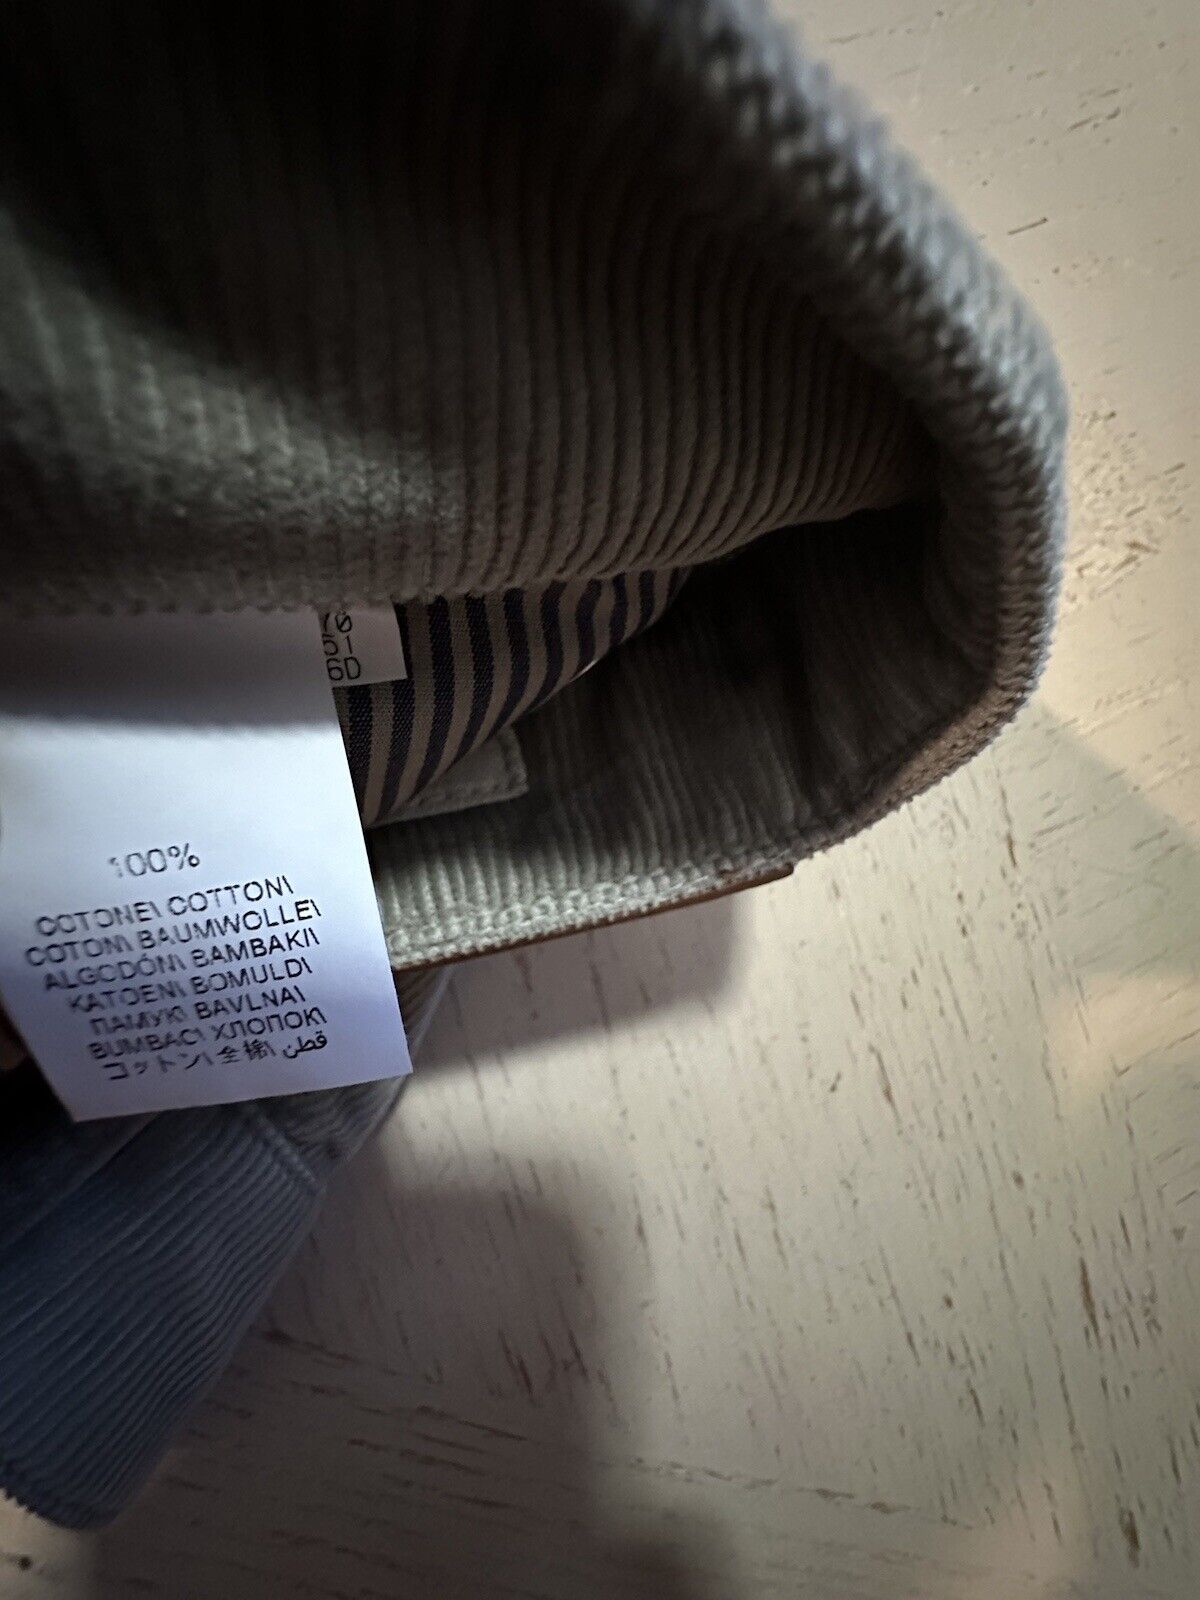 NWT $895 Brunello Cucinelli Men Italian Fit Textured Pants Khaki 30 US